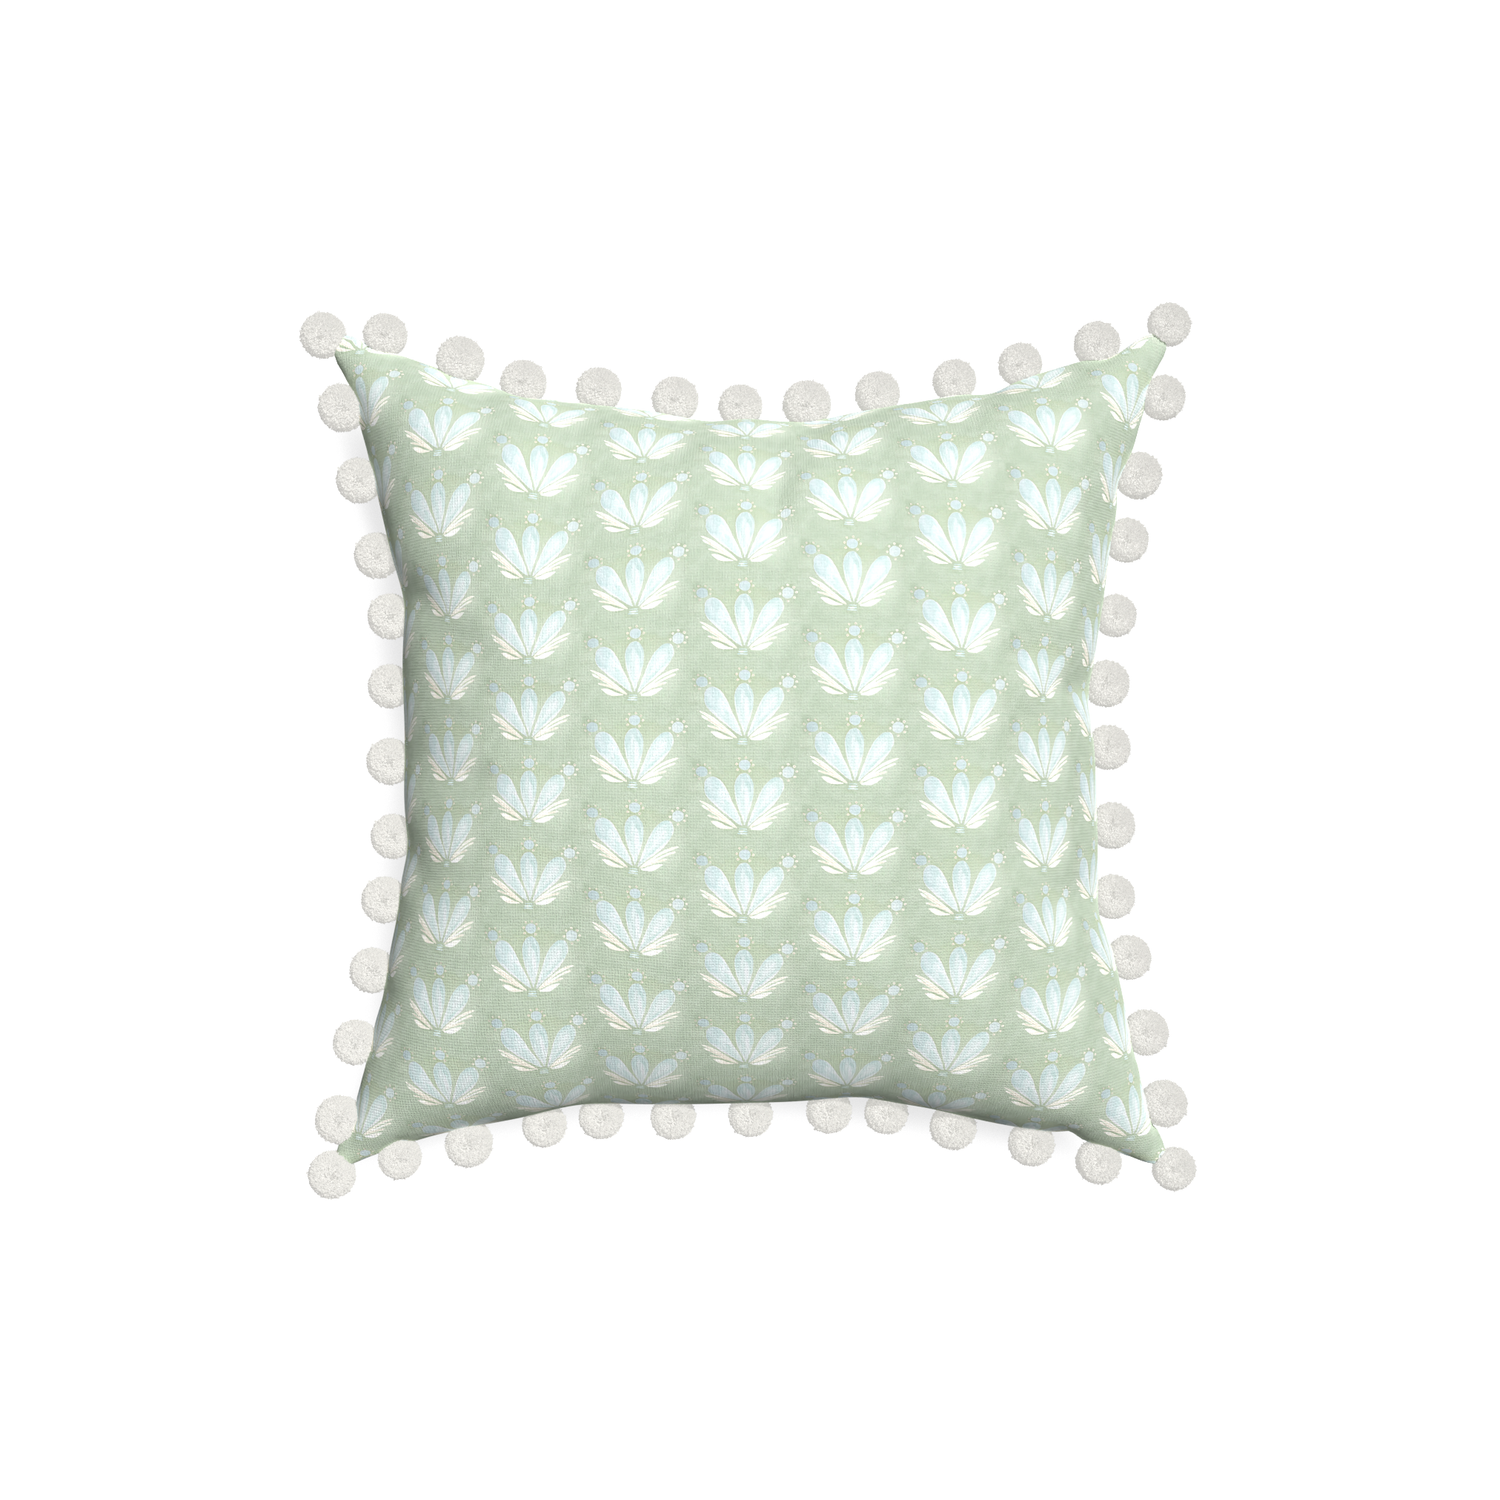 18-square serena sea salt custom pillow with snow pom pom on white background